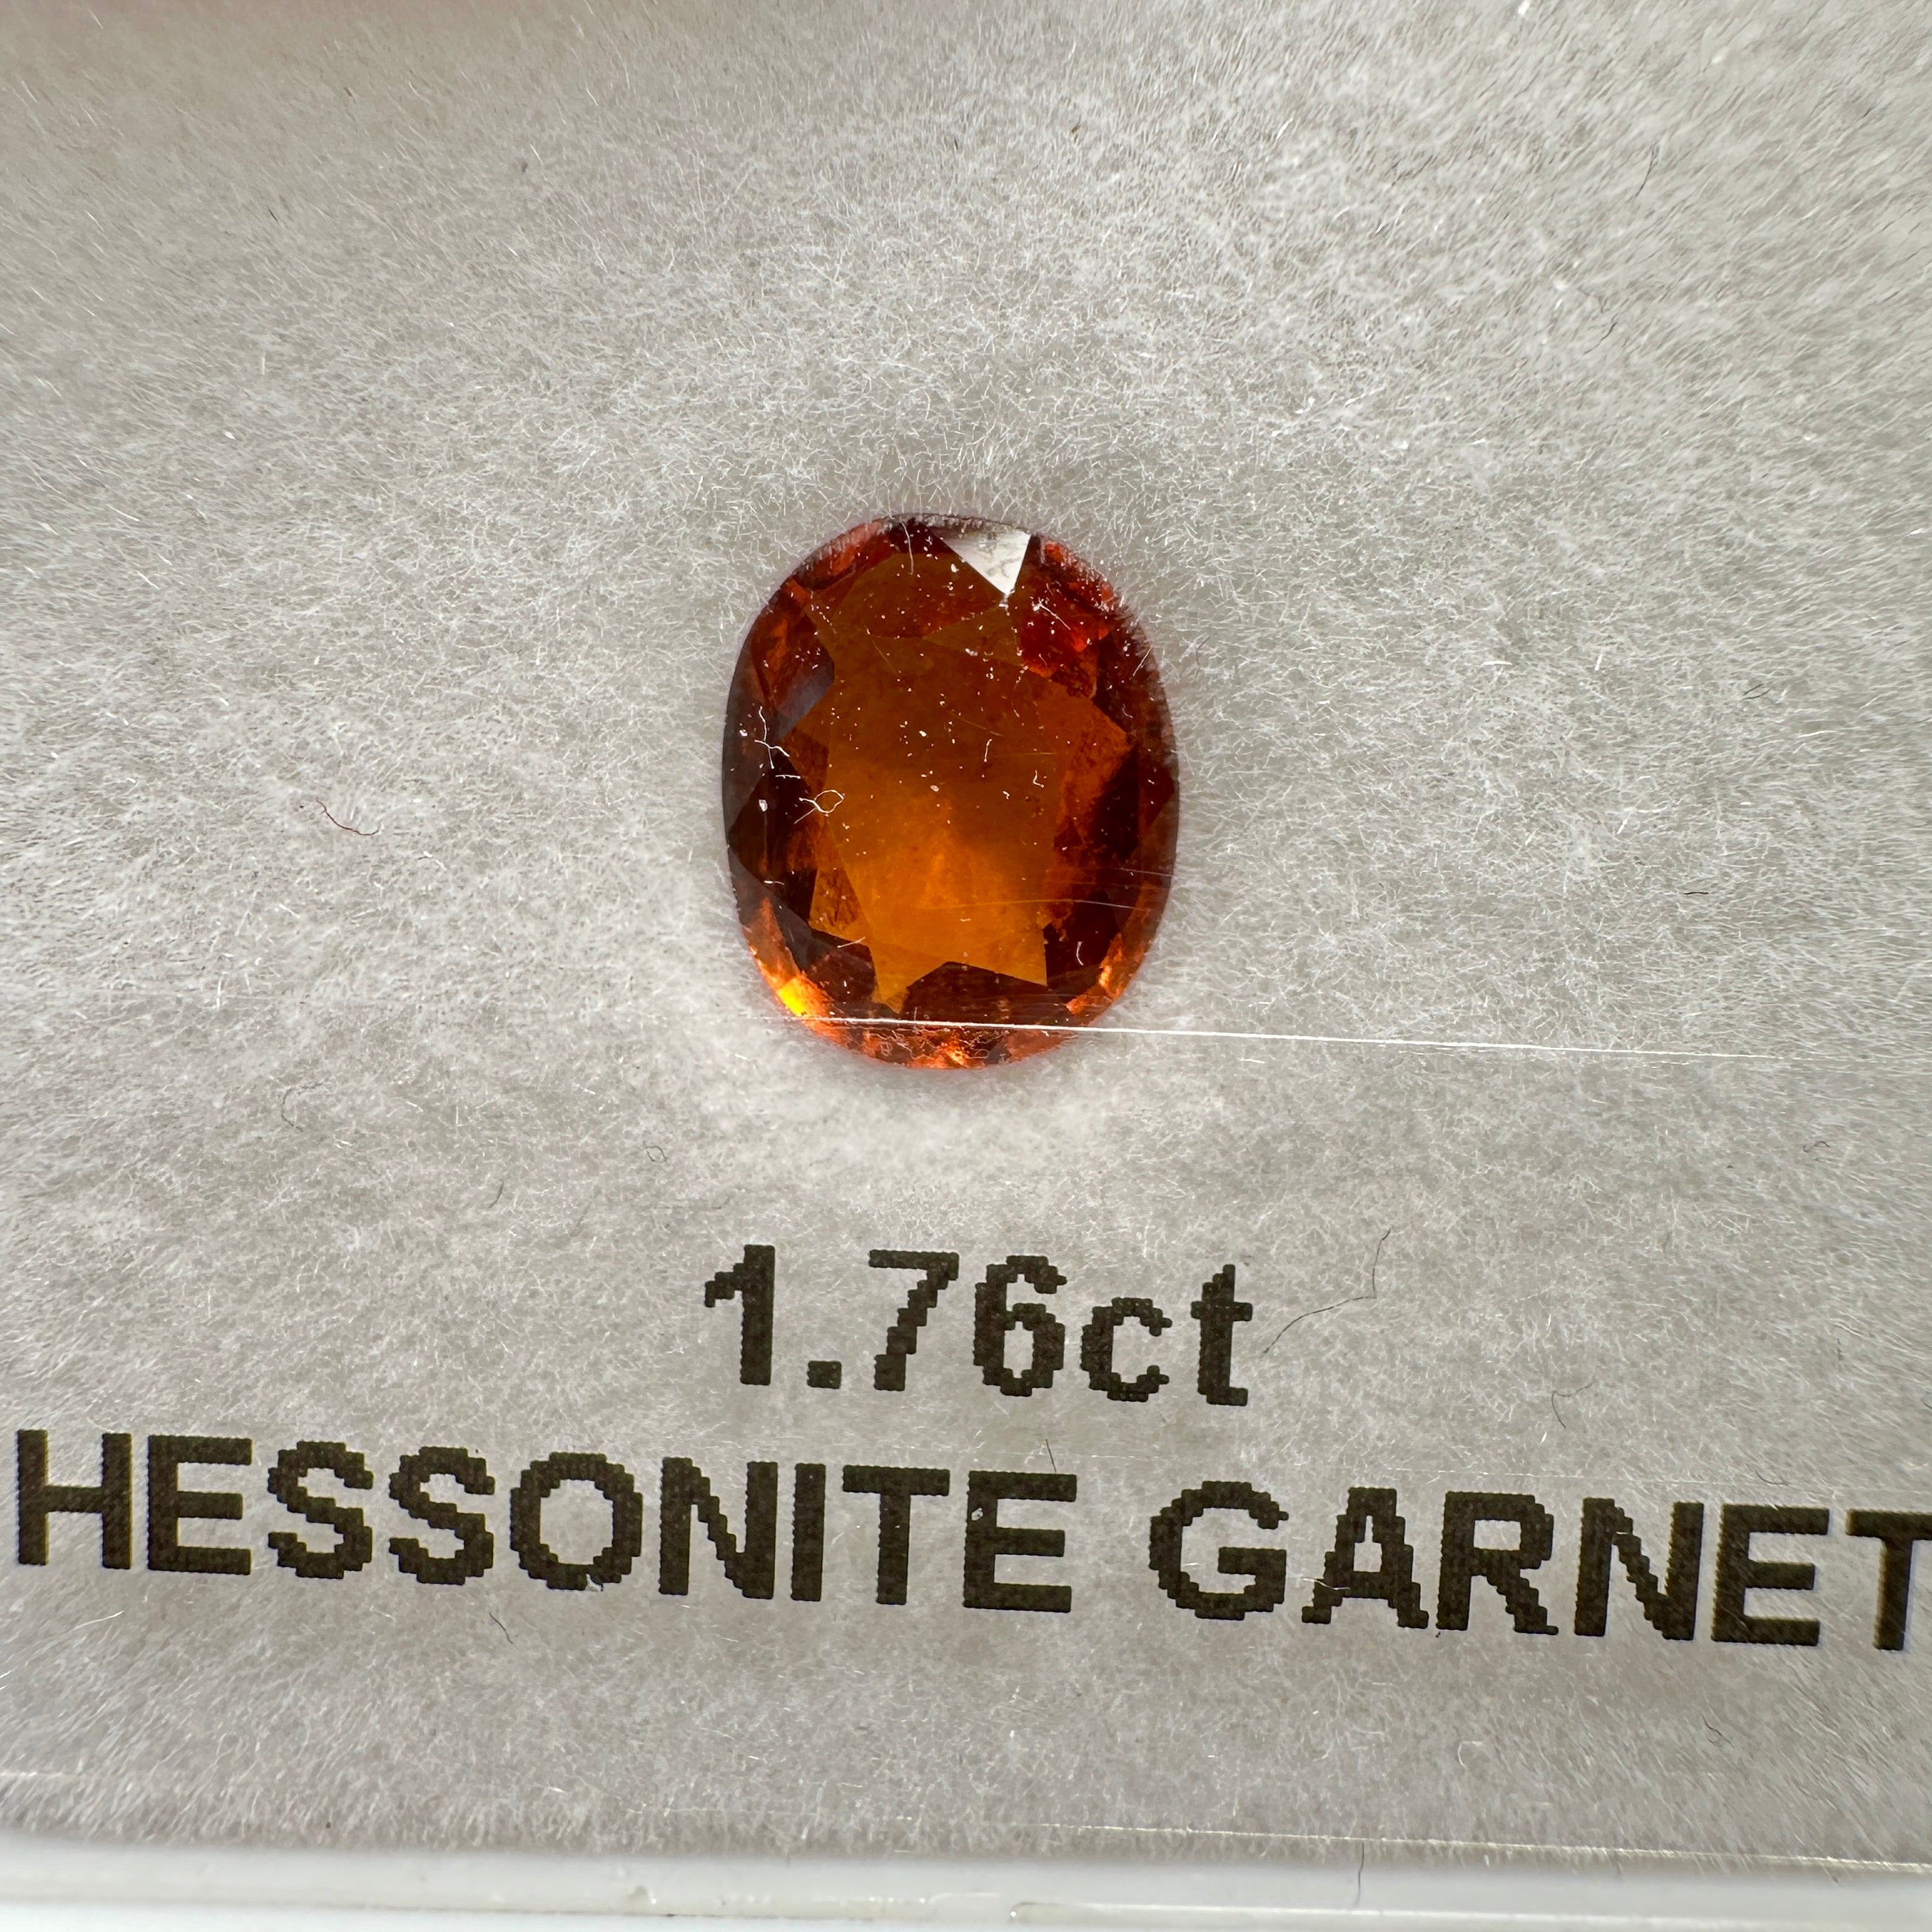 1.76ct Hessonite Garnet, Untreated Unheated, native cut